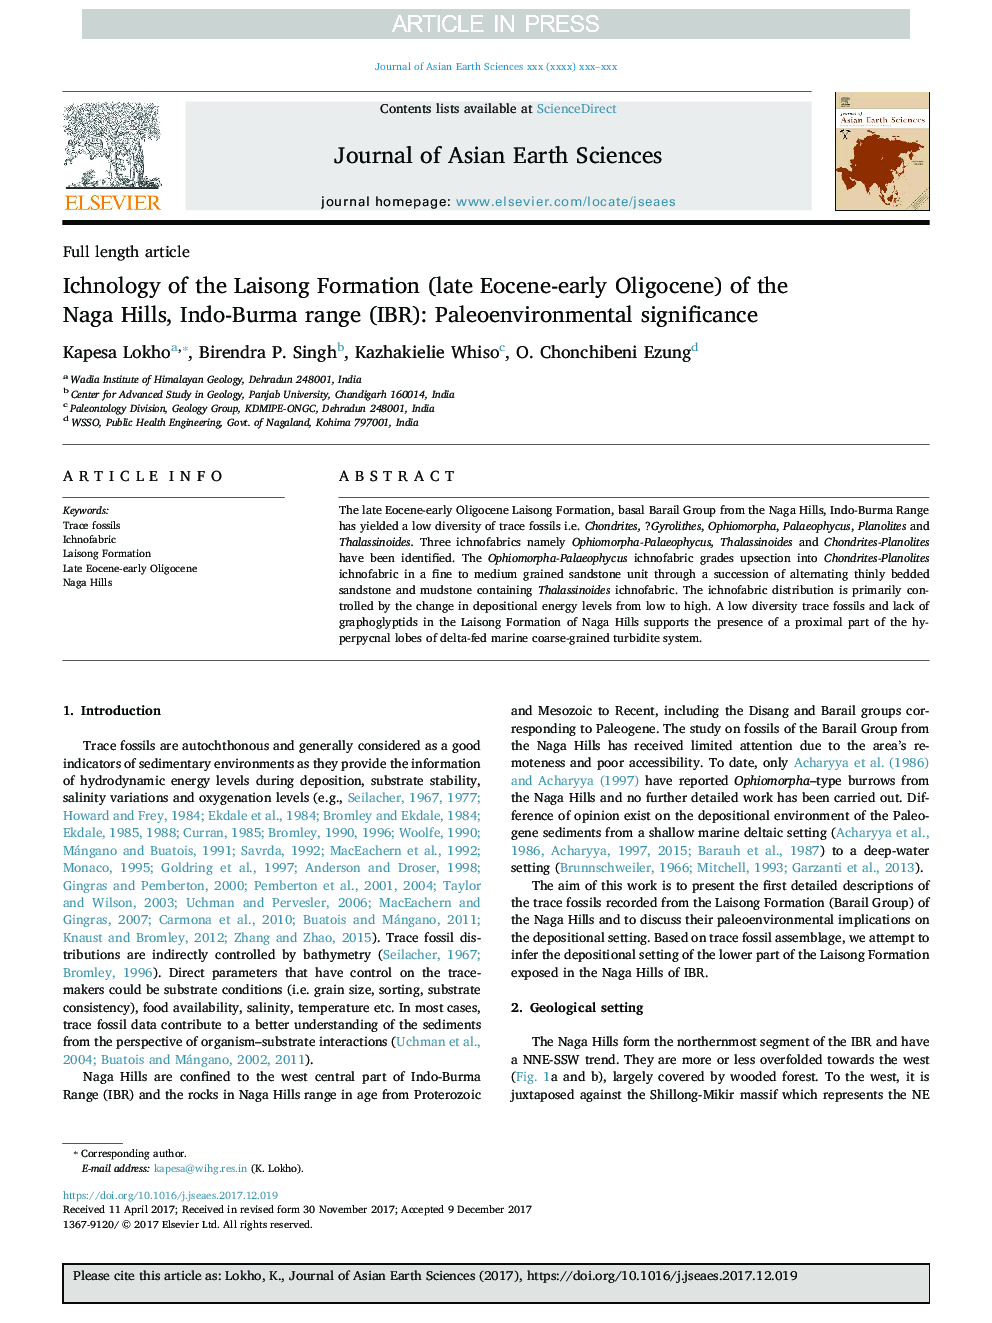 Ichnology of the Laisong Formation (late Eocene-early Oligocene) of the Naga Hills, Indo-Burma range (IBR): Paleoenvironmental significance